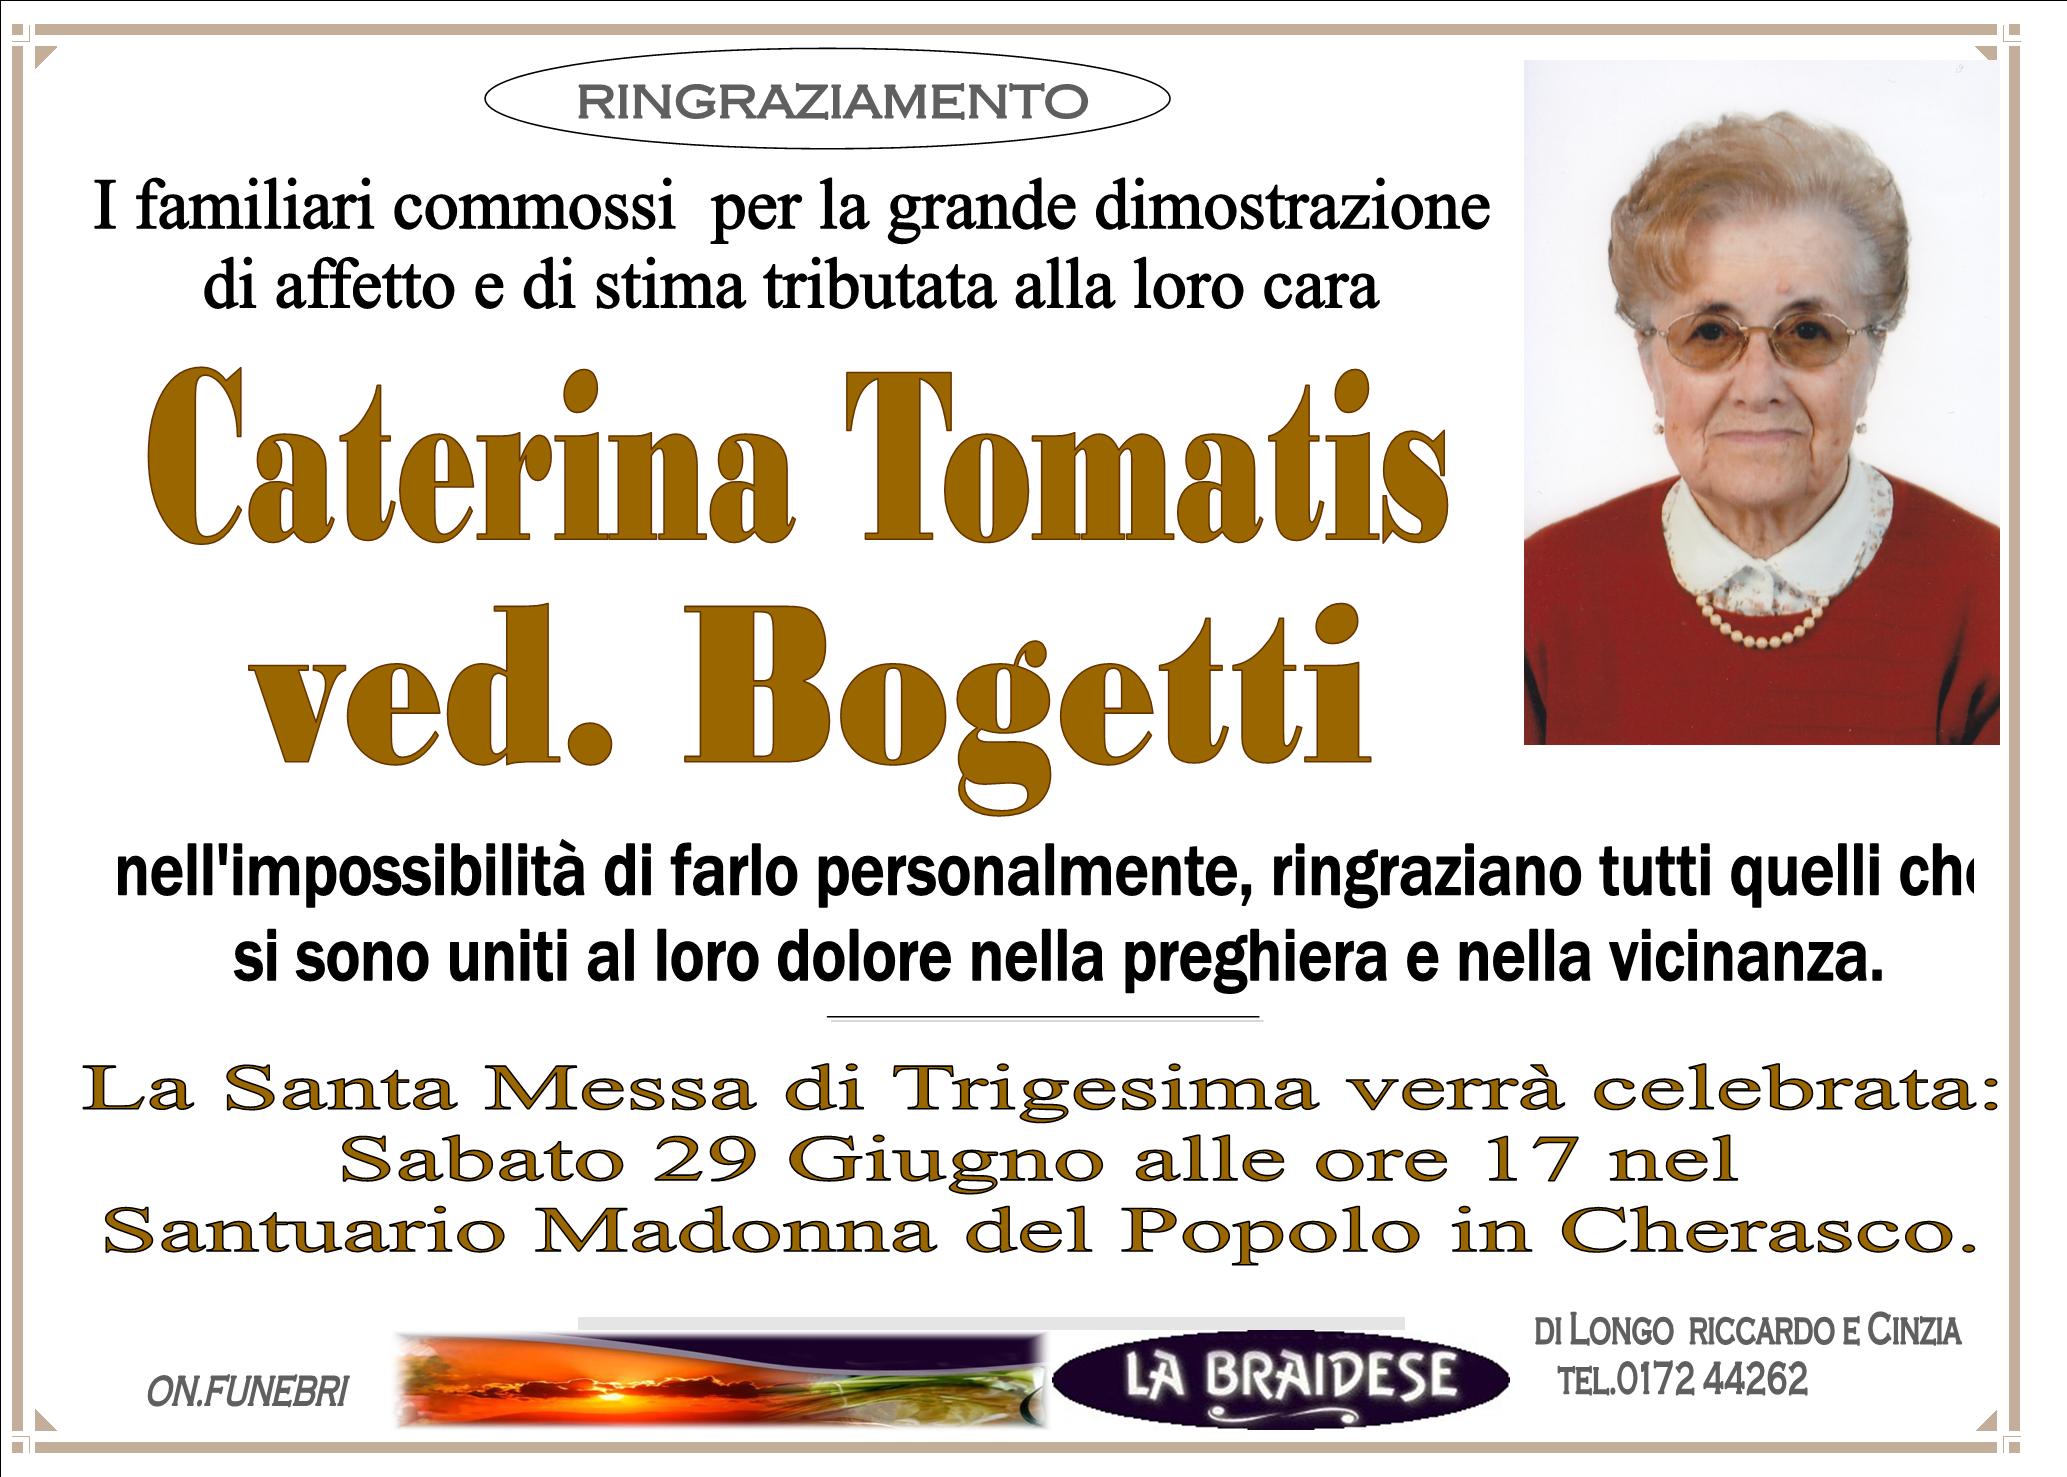 Caterina Tomatis ved. Bogetti